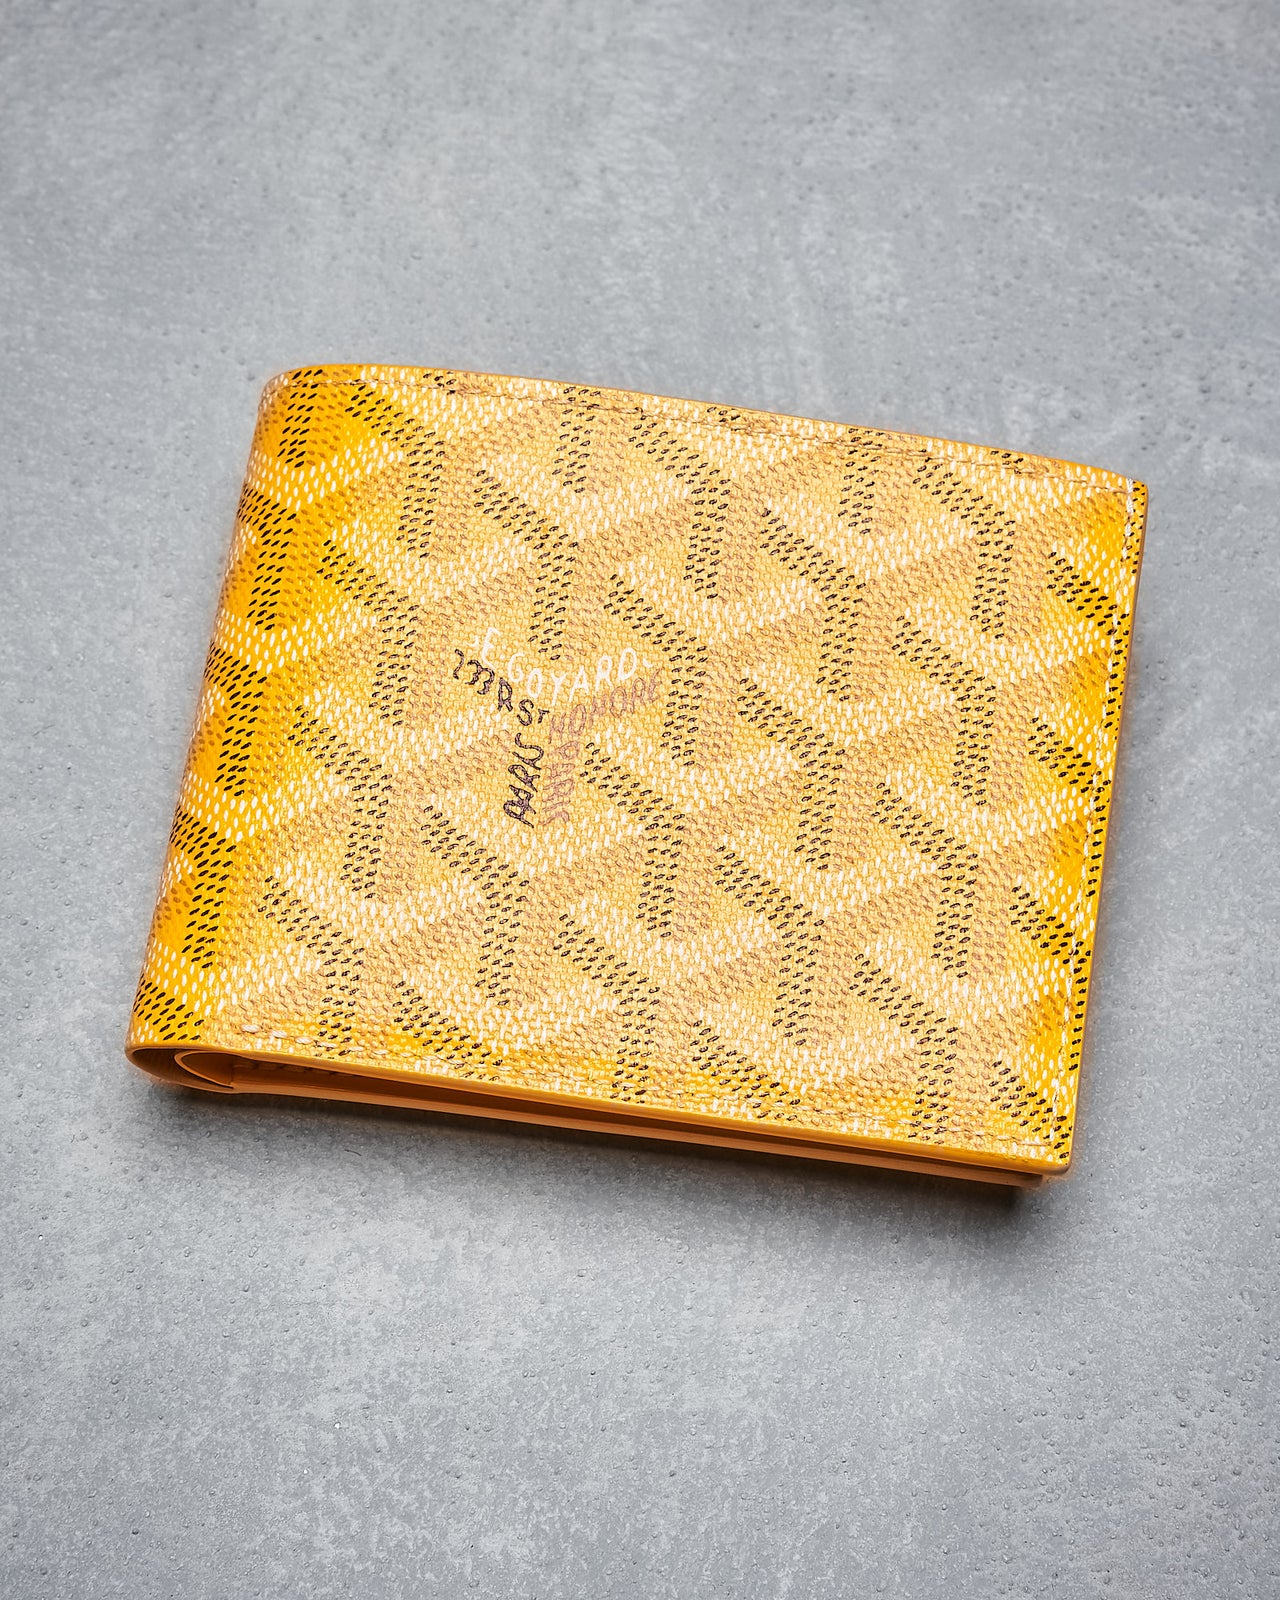 Victoire goyardine wallet in coated canvas